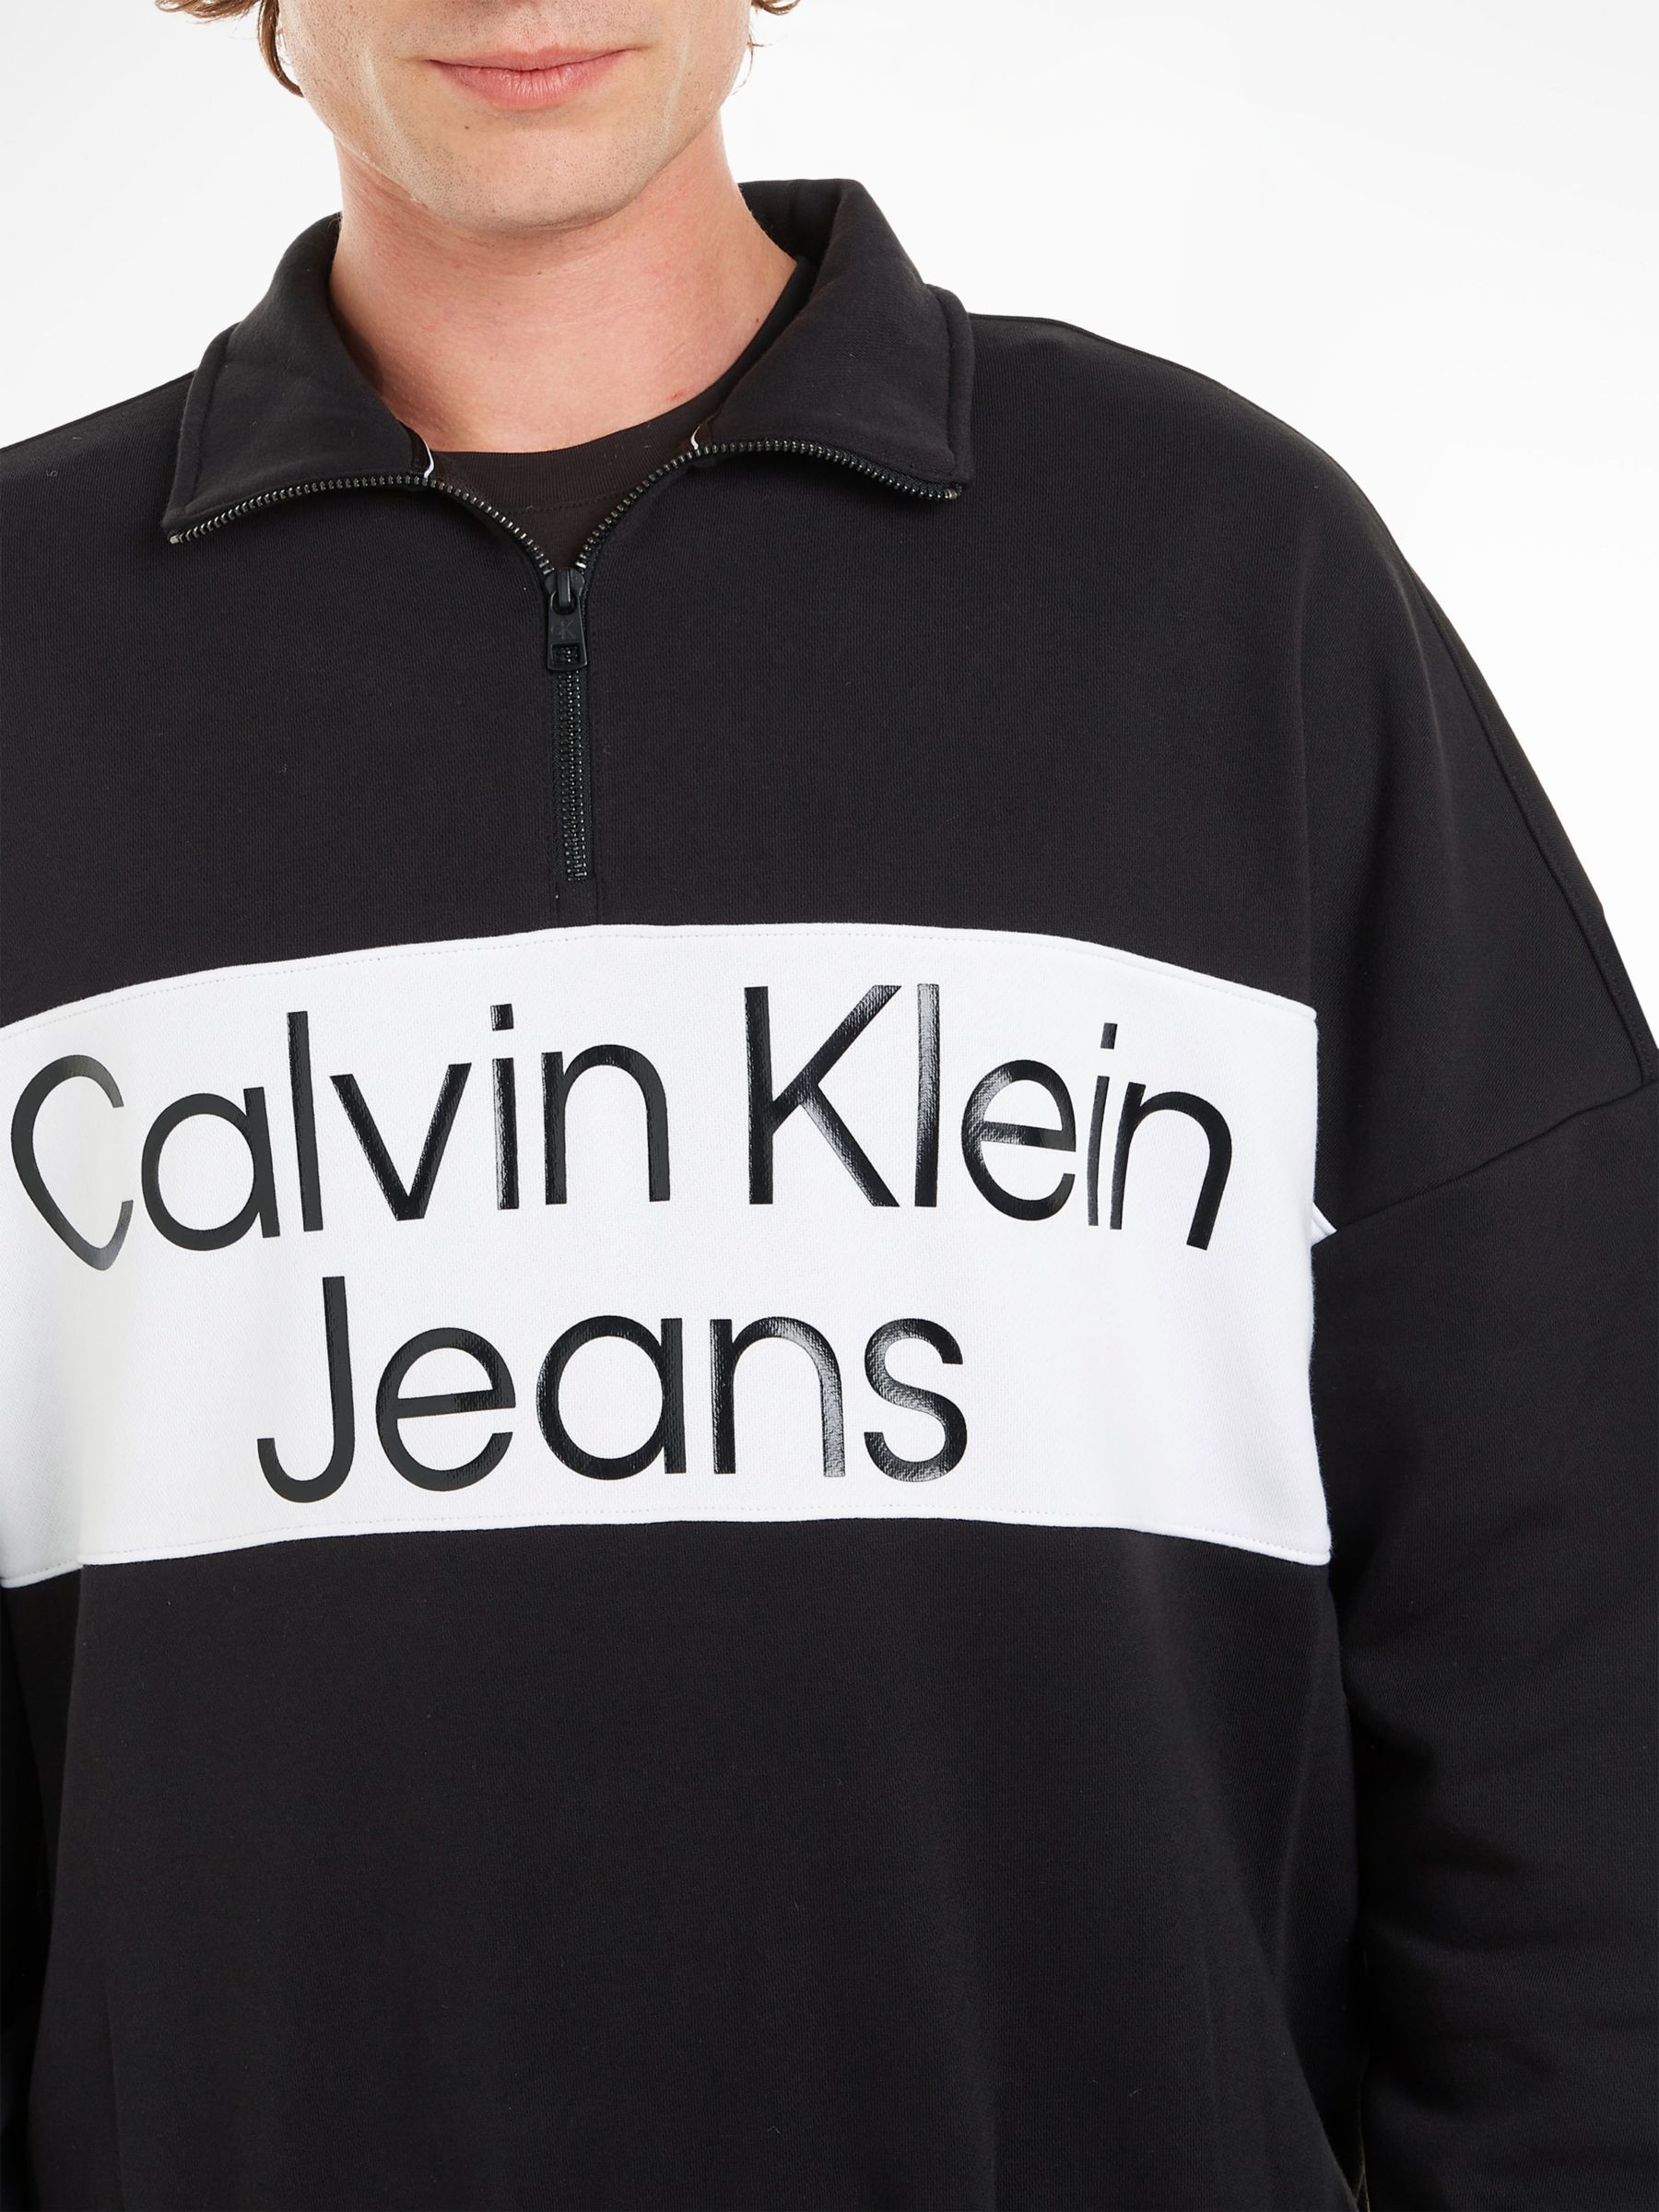 & Klein Lewis Logo at Jumper, Partners Ck Zip John Calvin Quarter Jeans Black